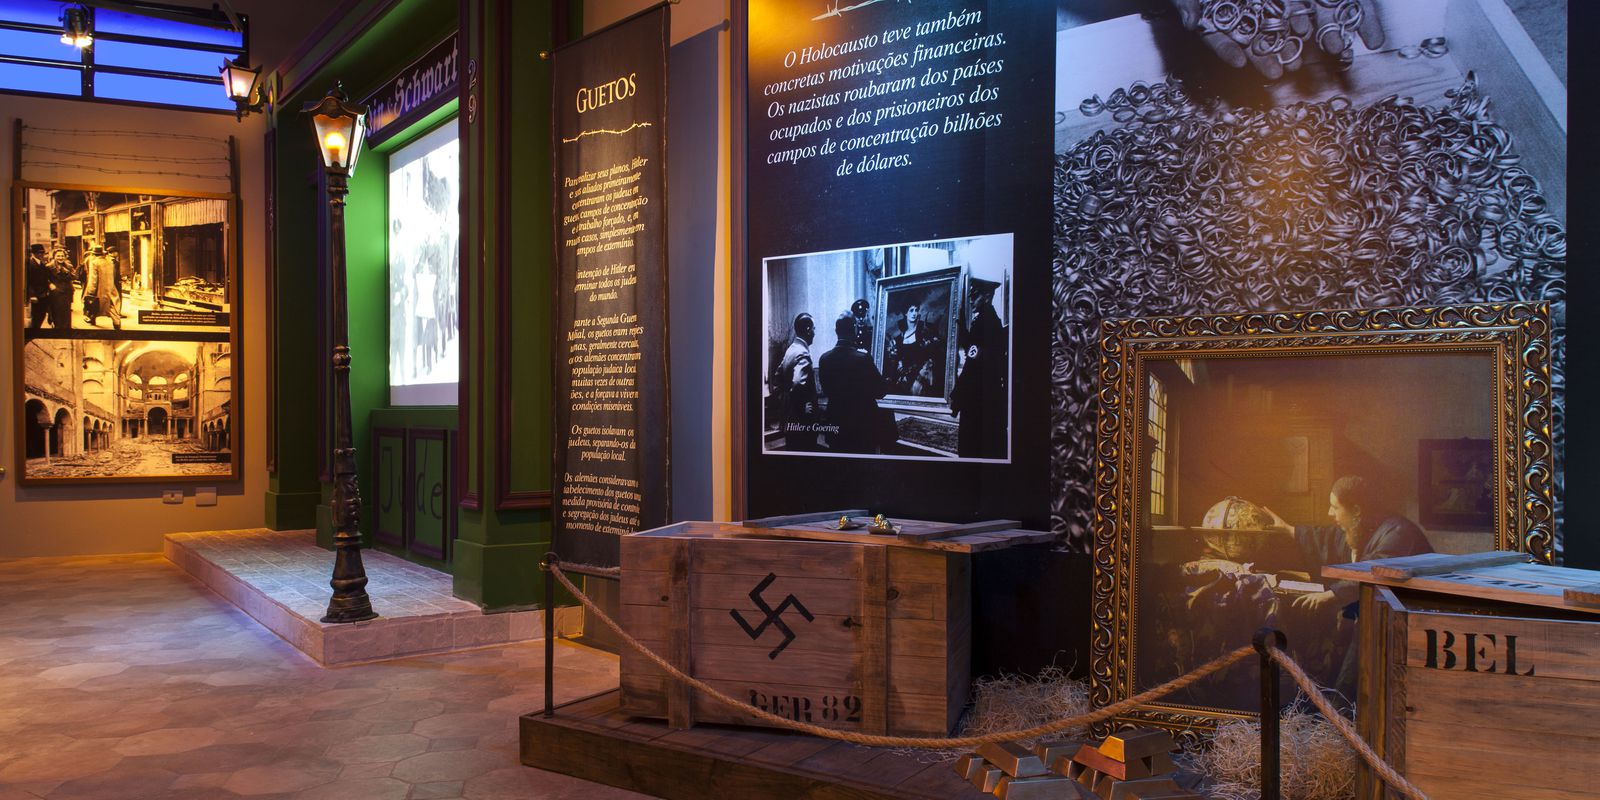 Rio: Holocaust Memorial opens its doors to the public